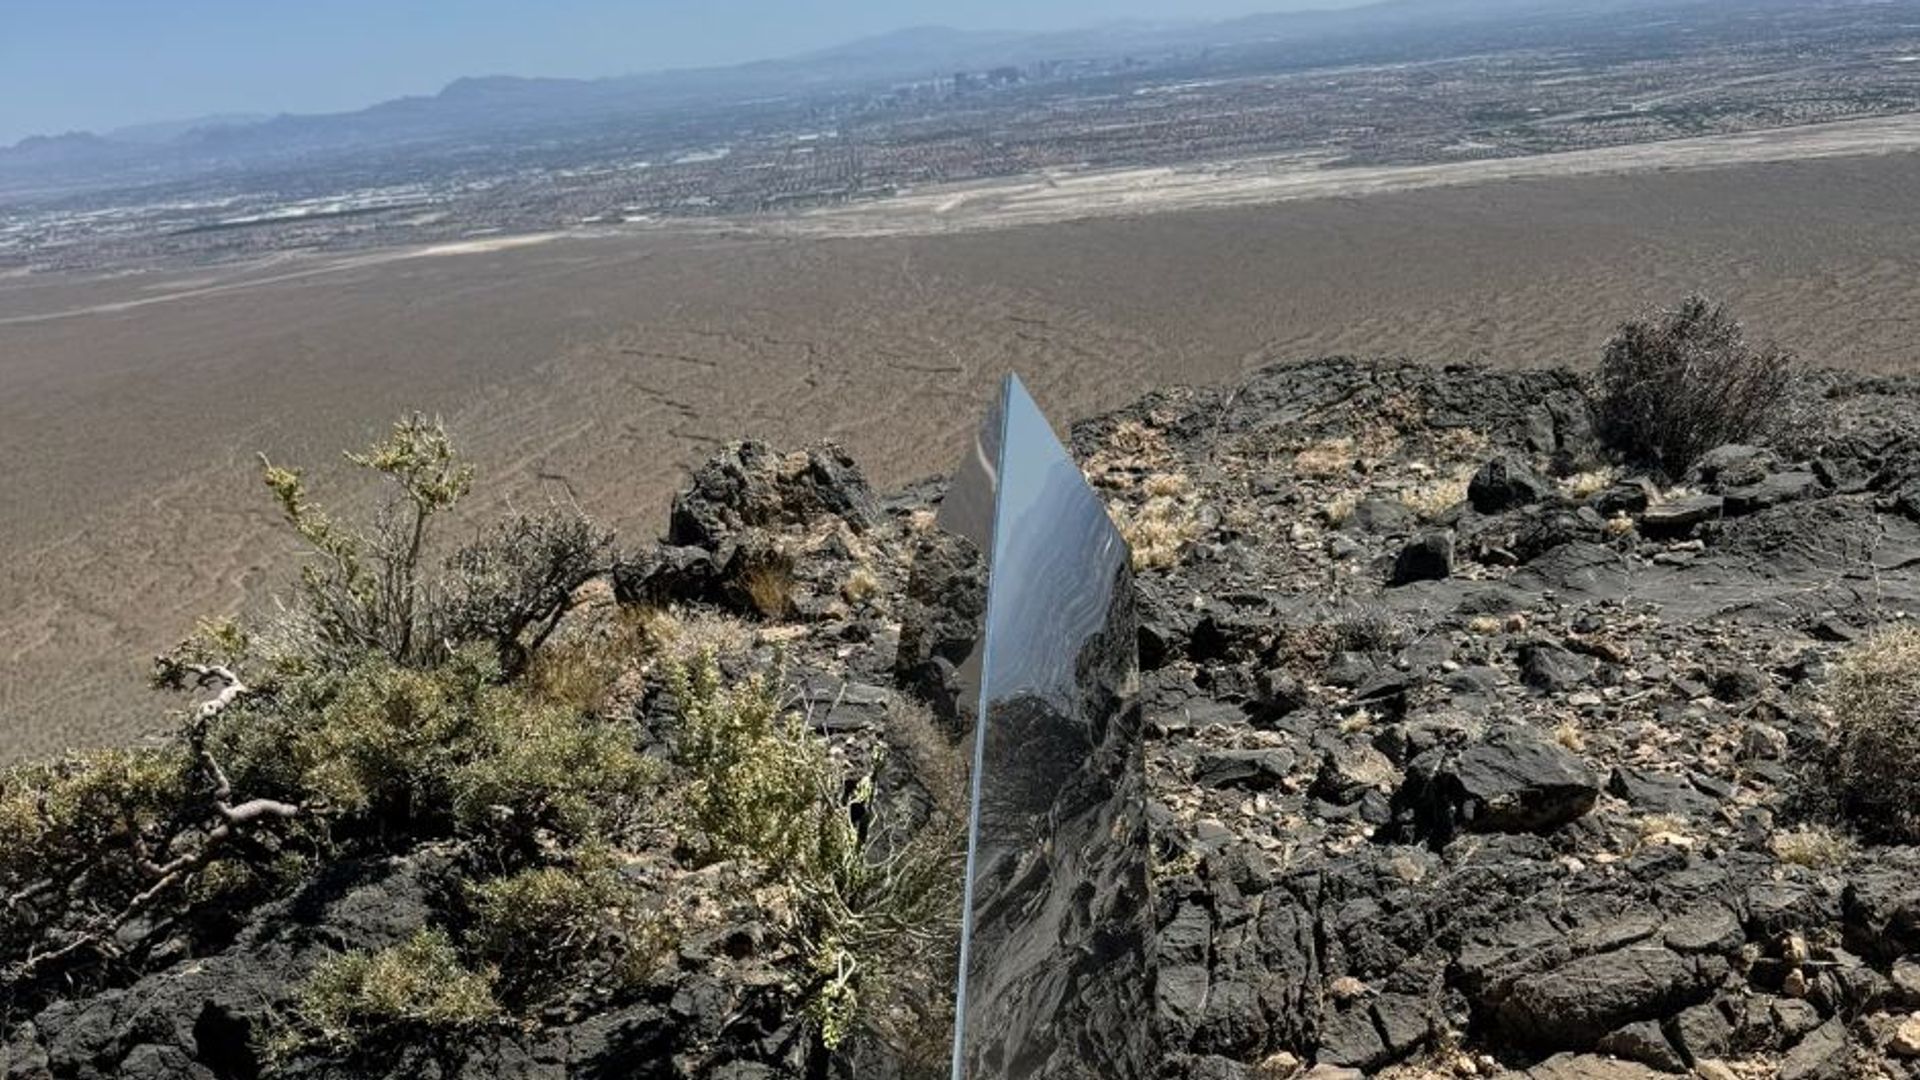 Origins of Vegas monolith 'remain unknown'